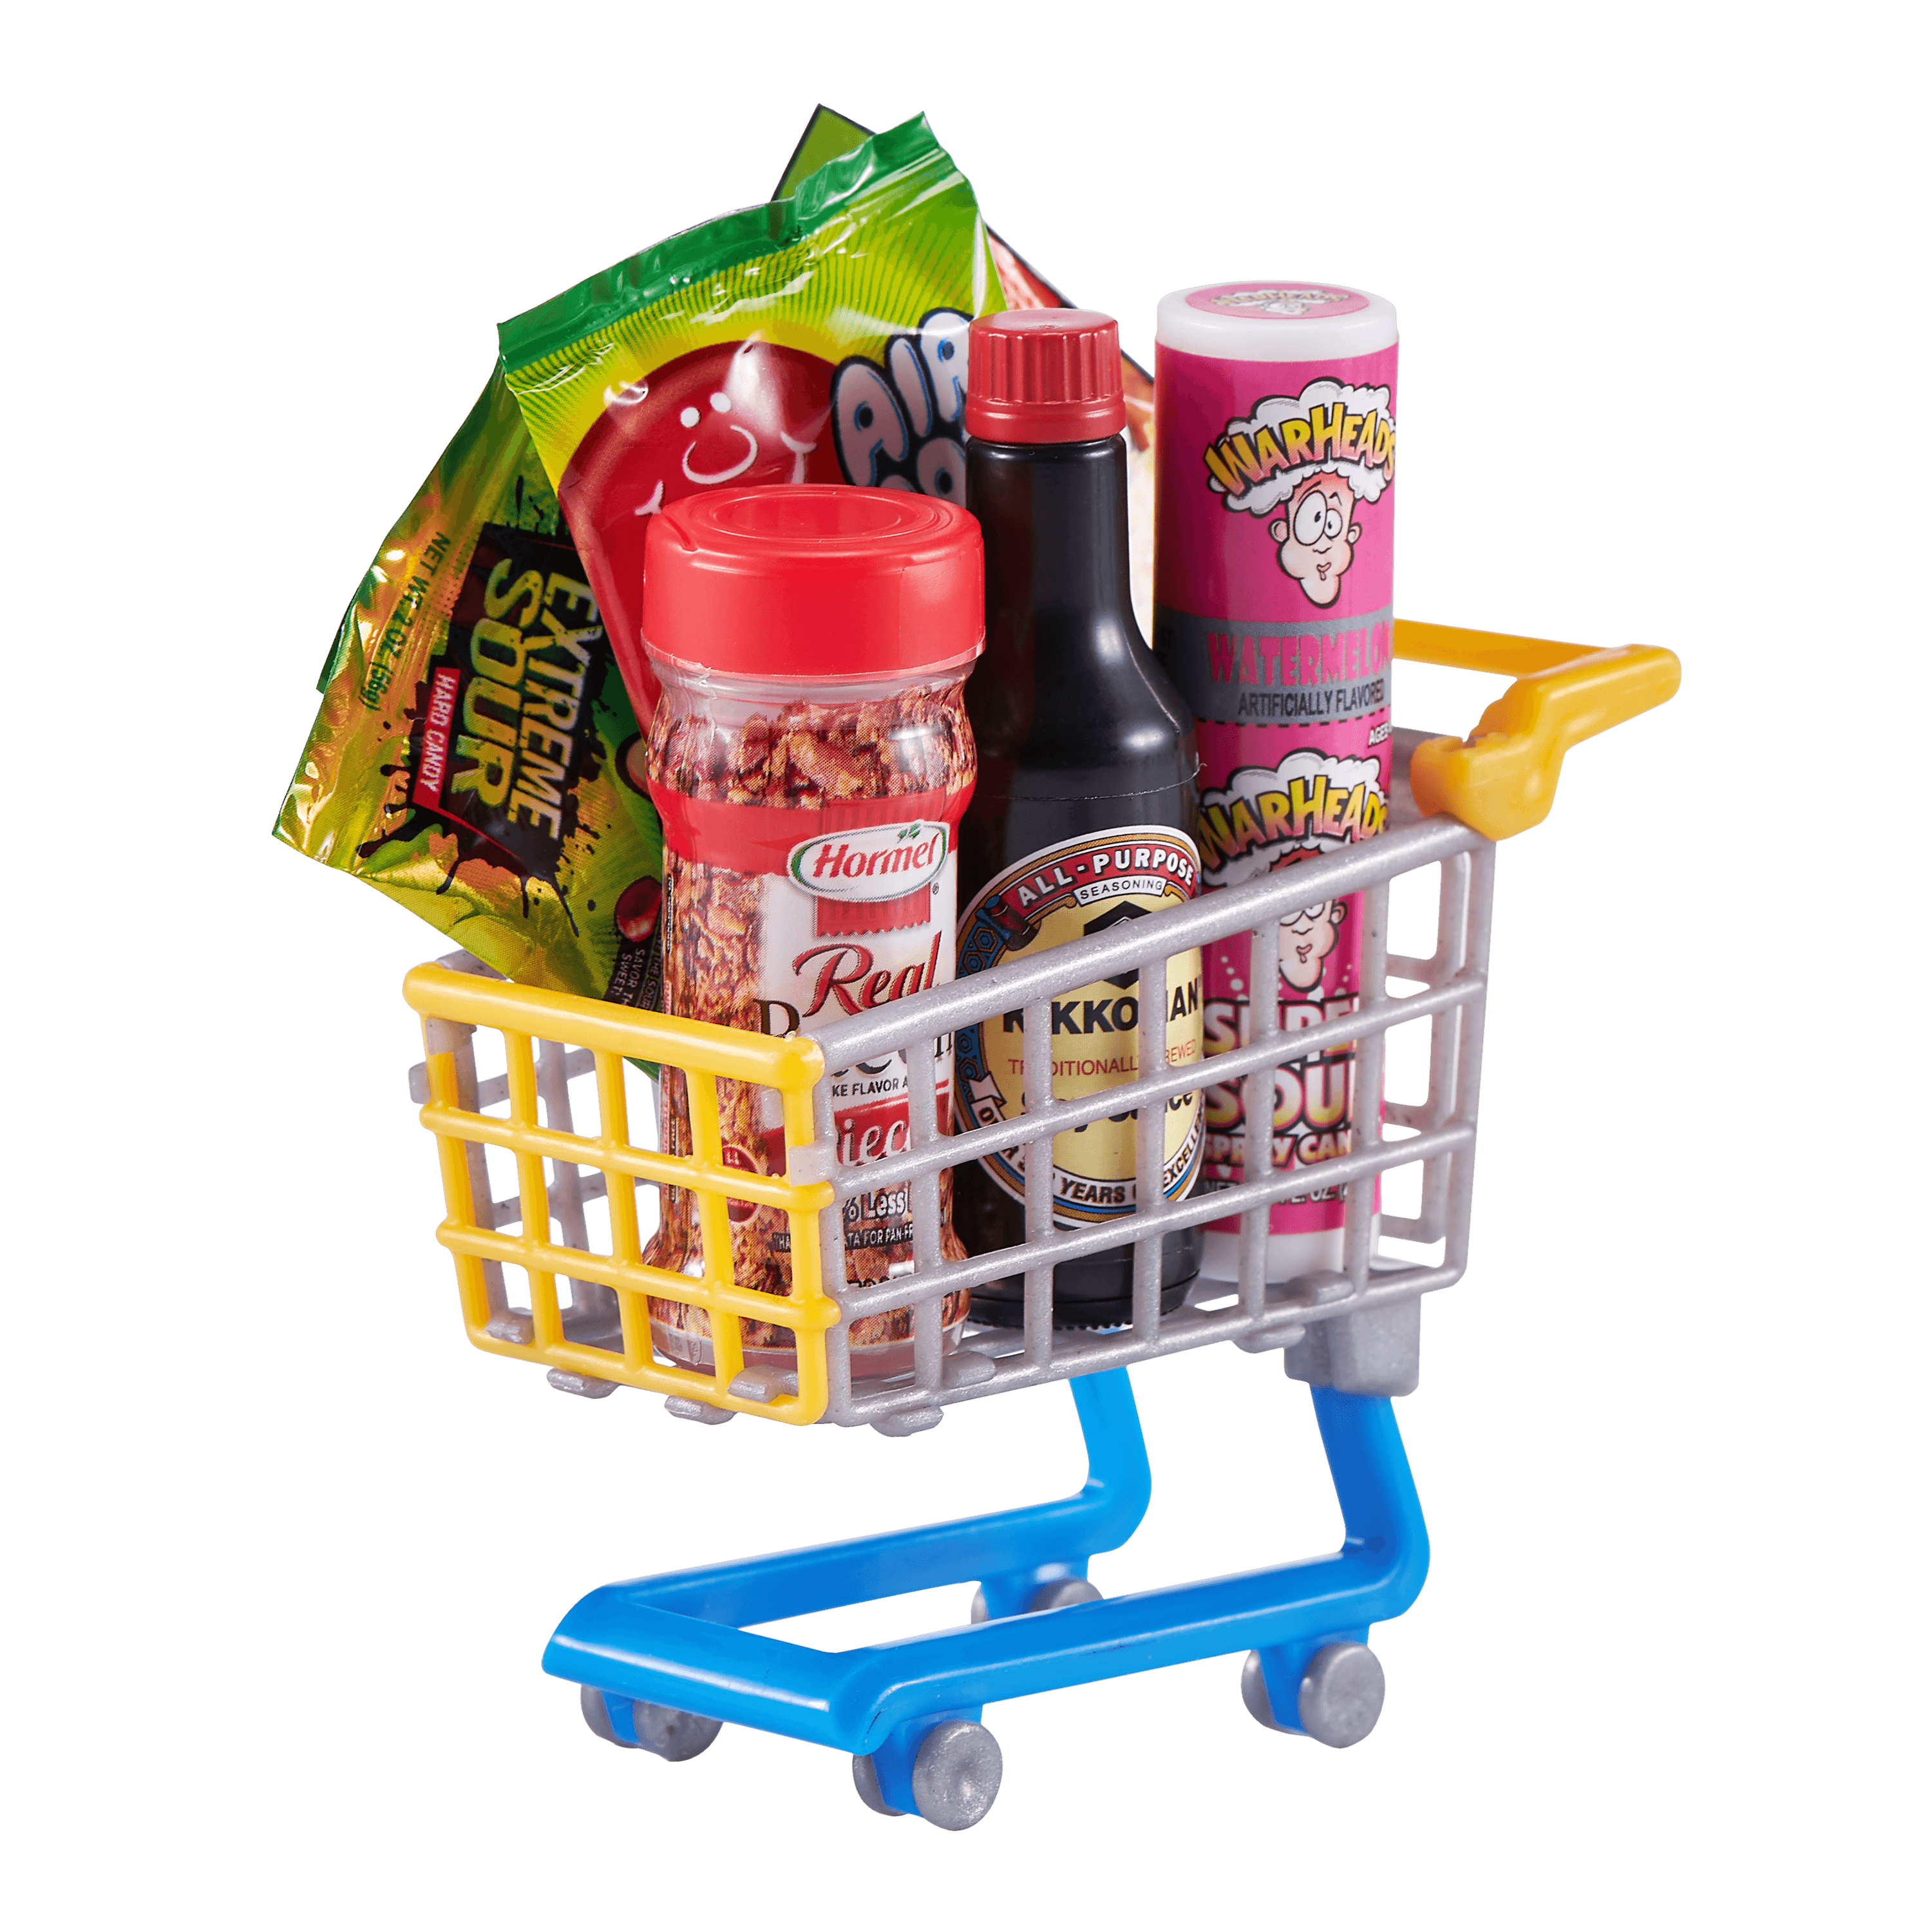 Zuru 5 SURPRISE! MINI BRANDS Shopping Cart NEW 2019 Miniatures